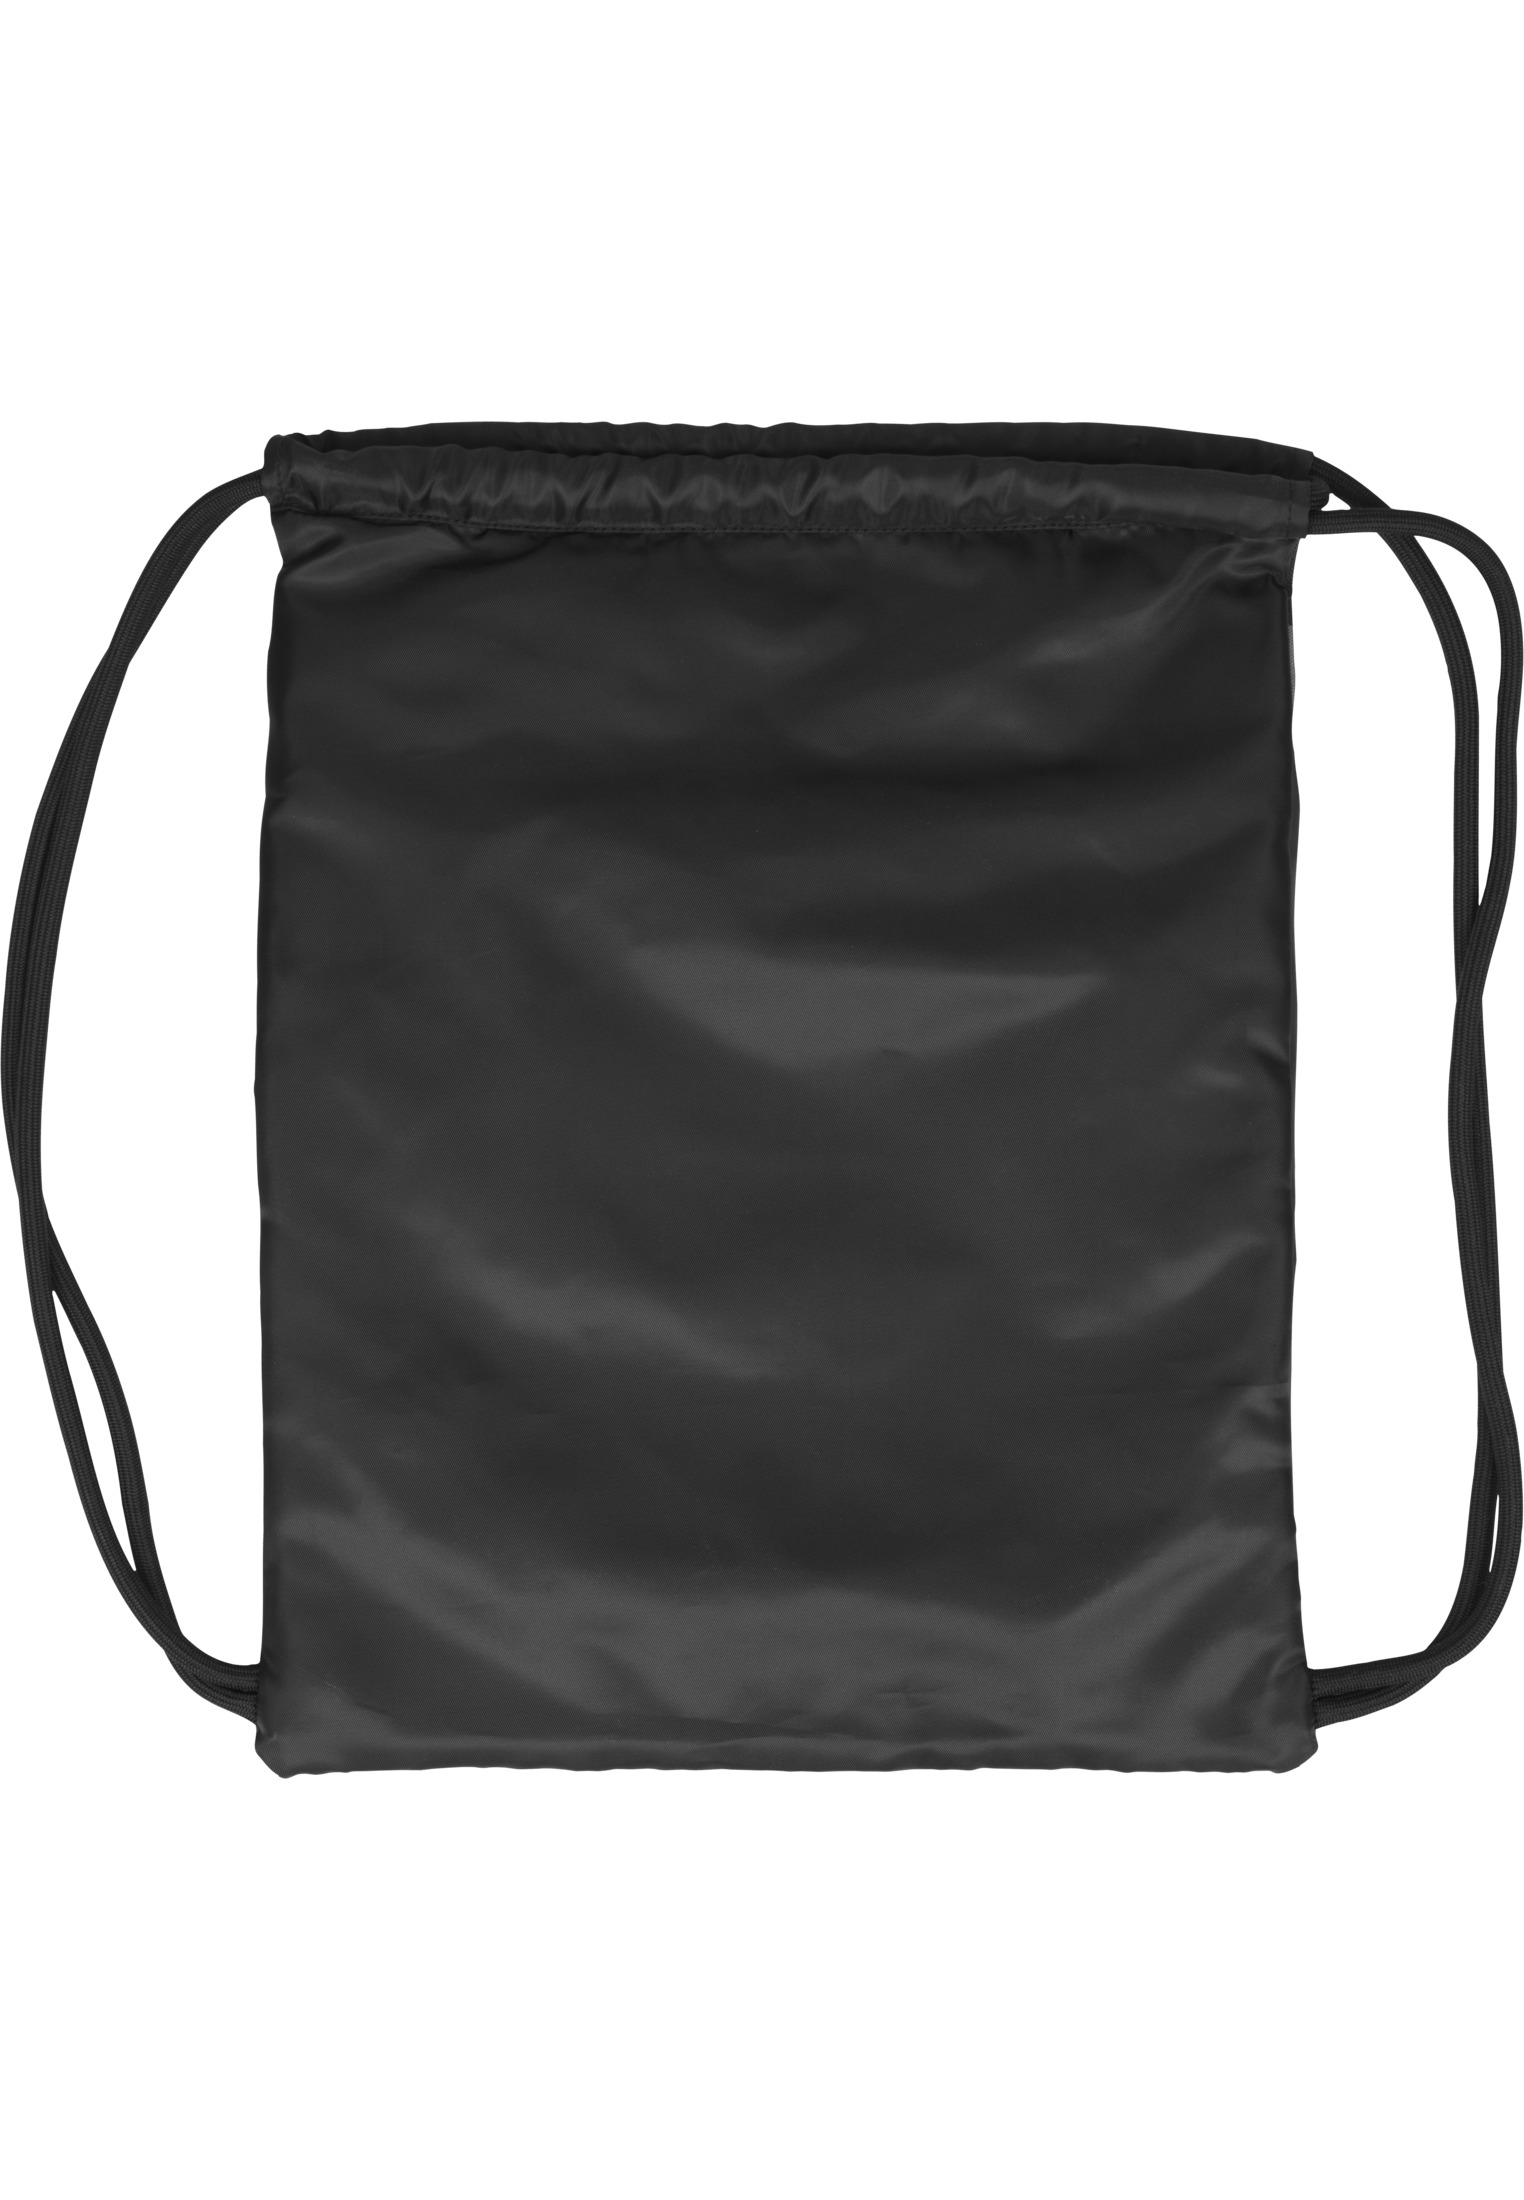 Taschen Ball Gym Bag in Farbe black/camo/black